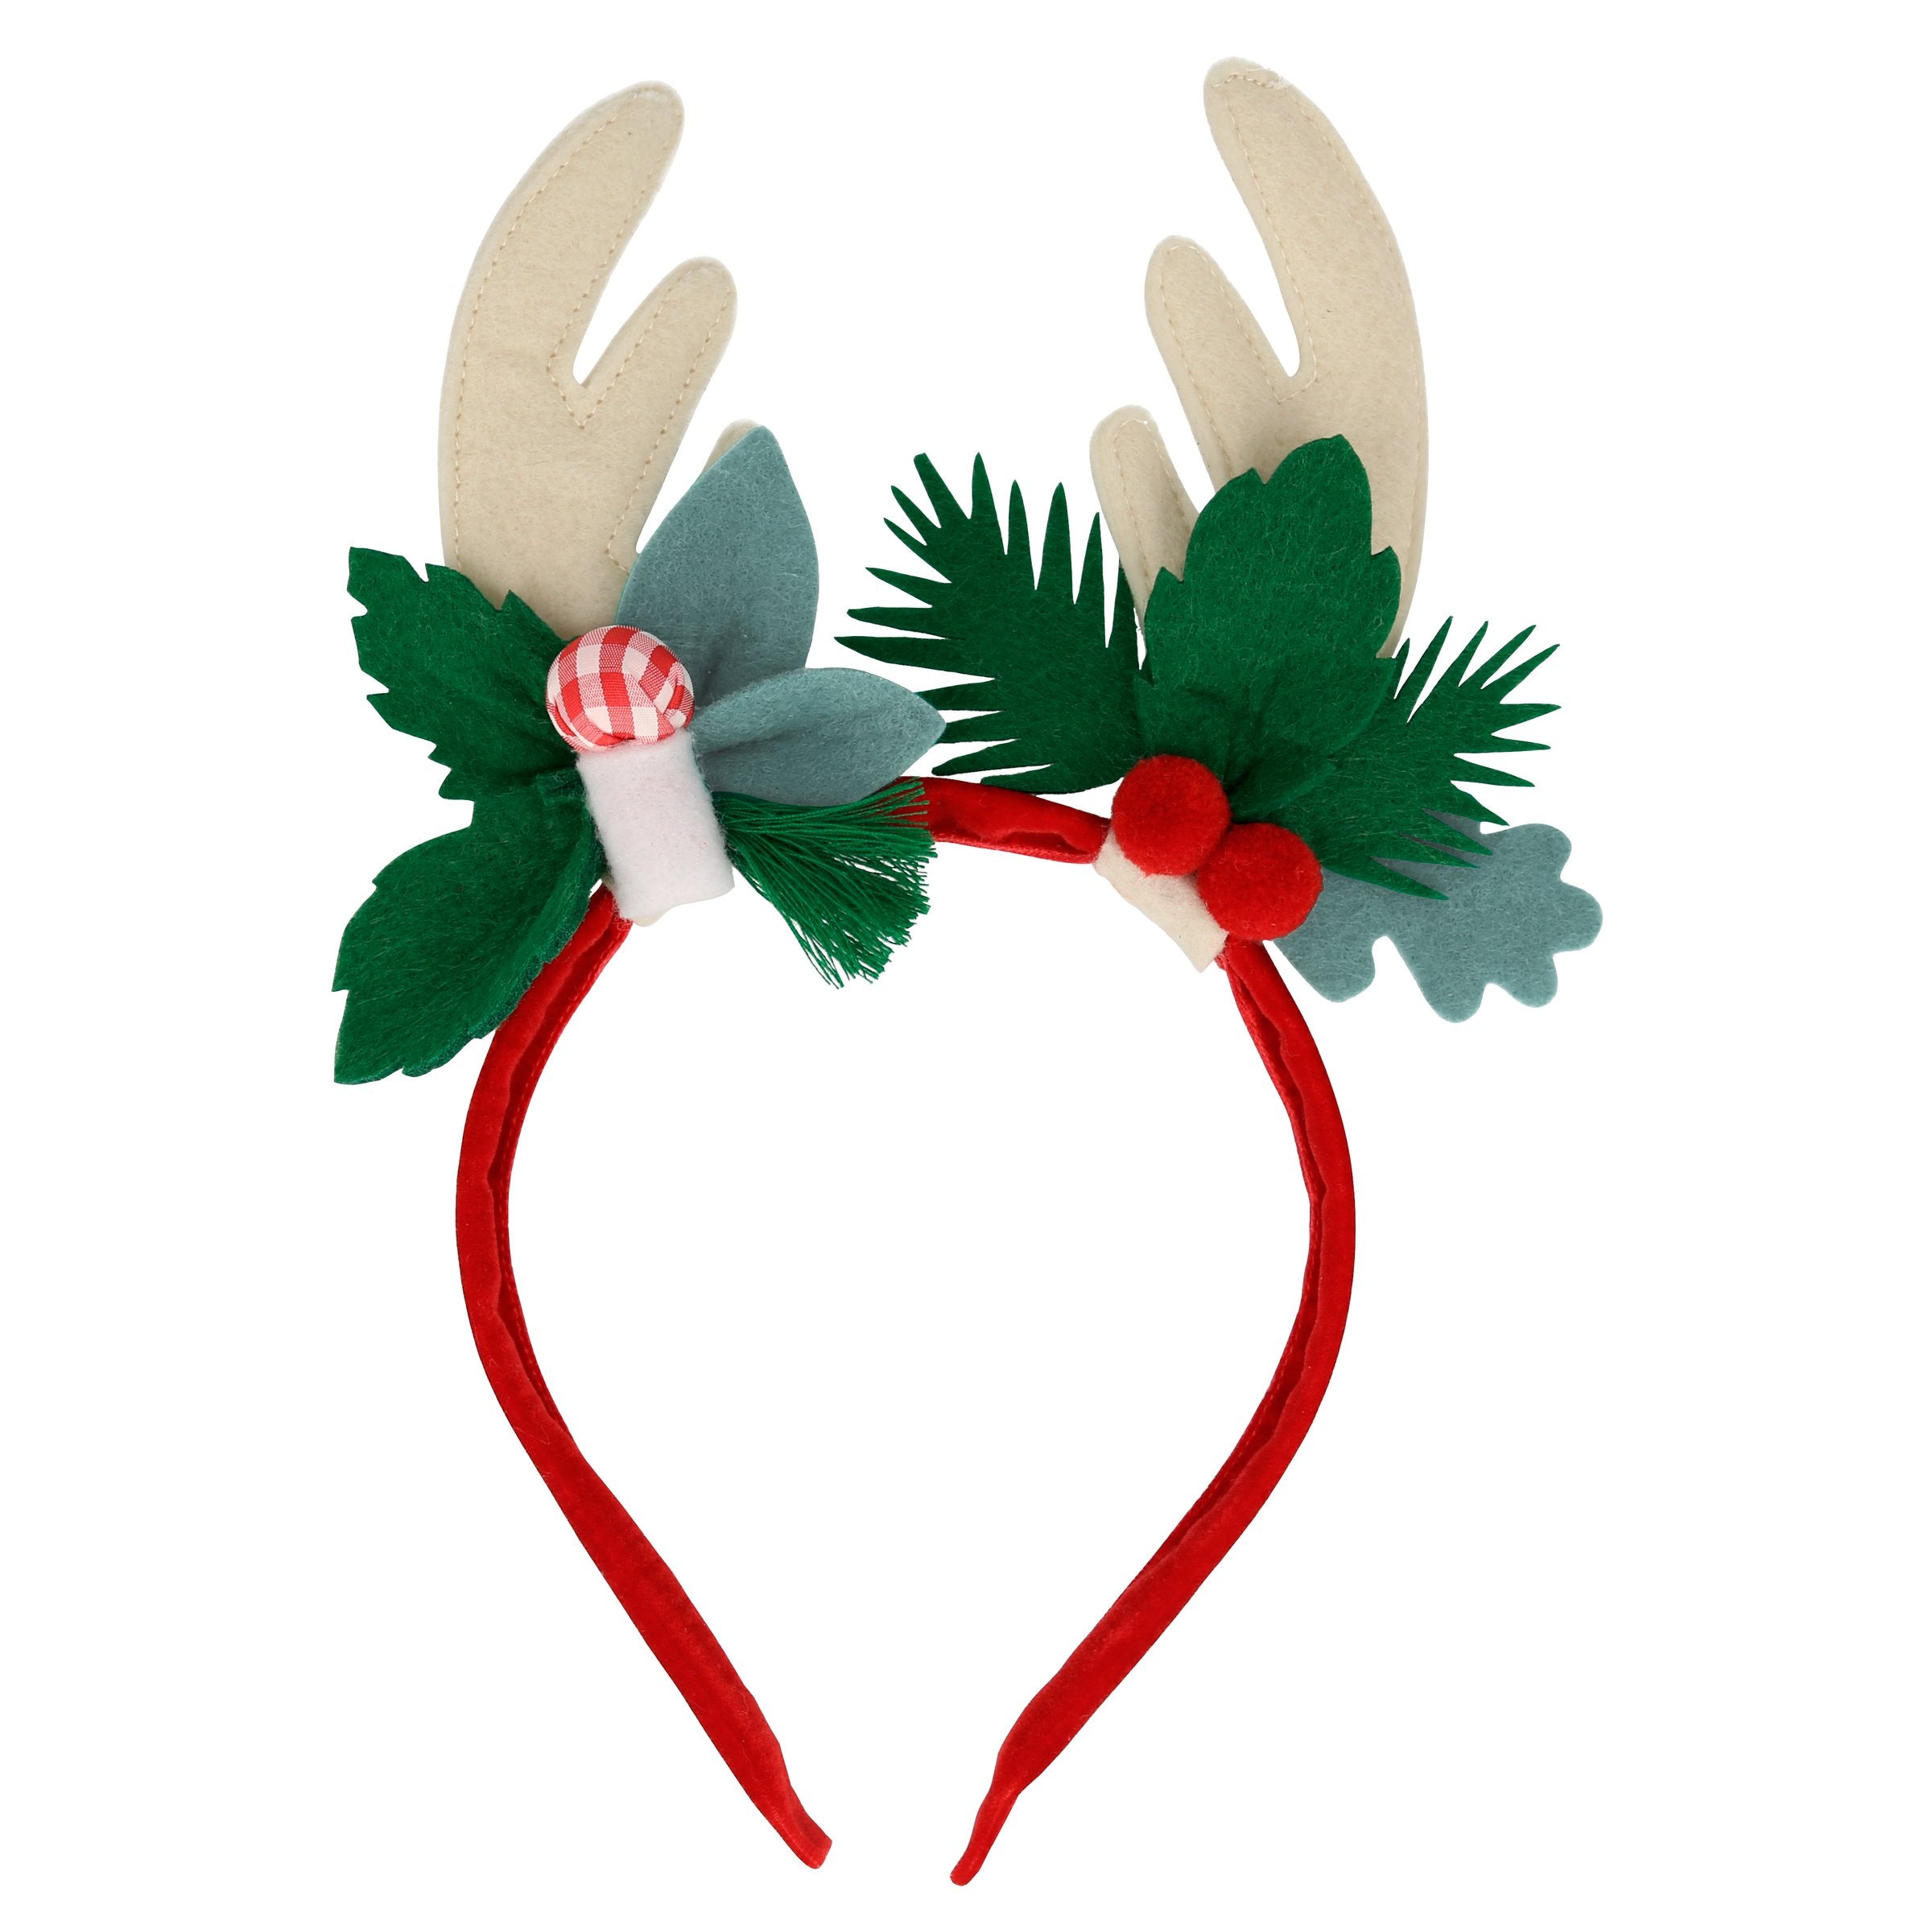 Our felt reindeer antlers make a fabulous kids Christmas costume.